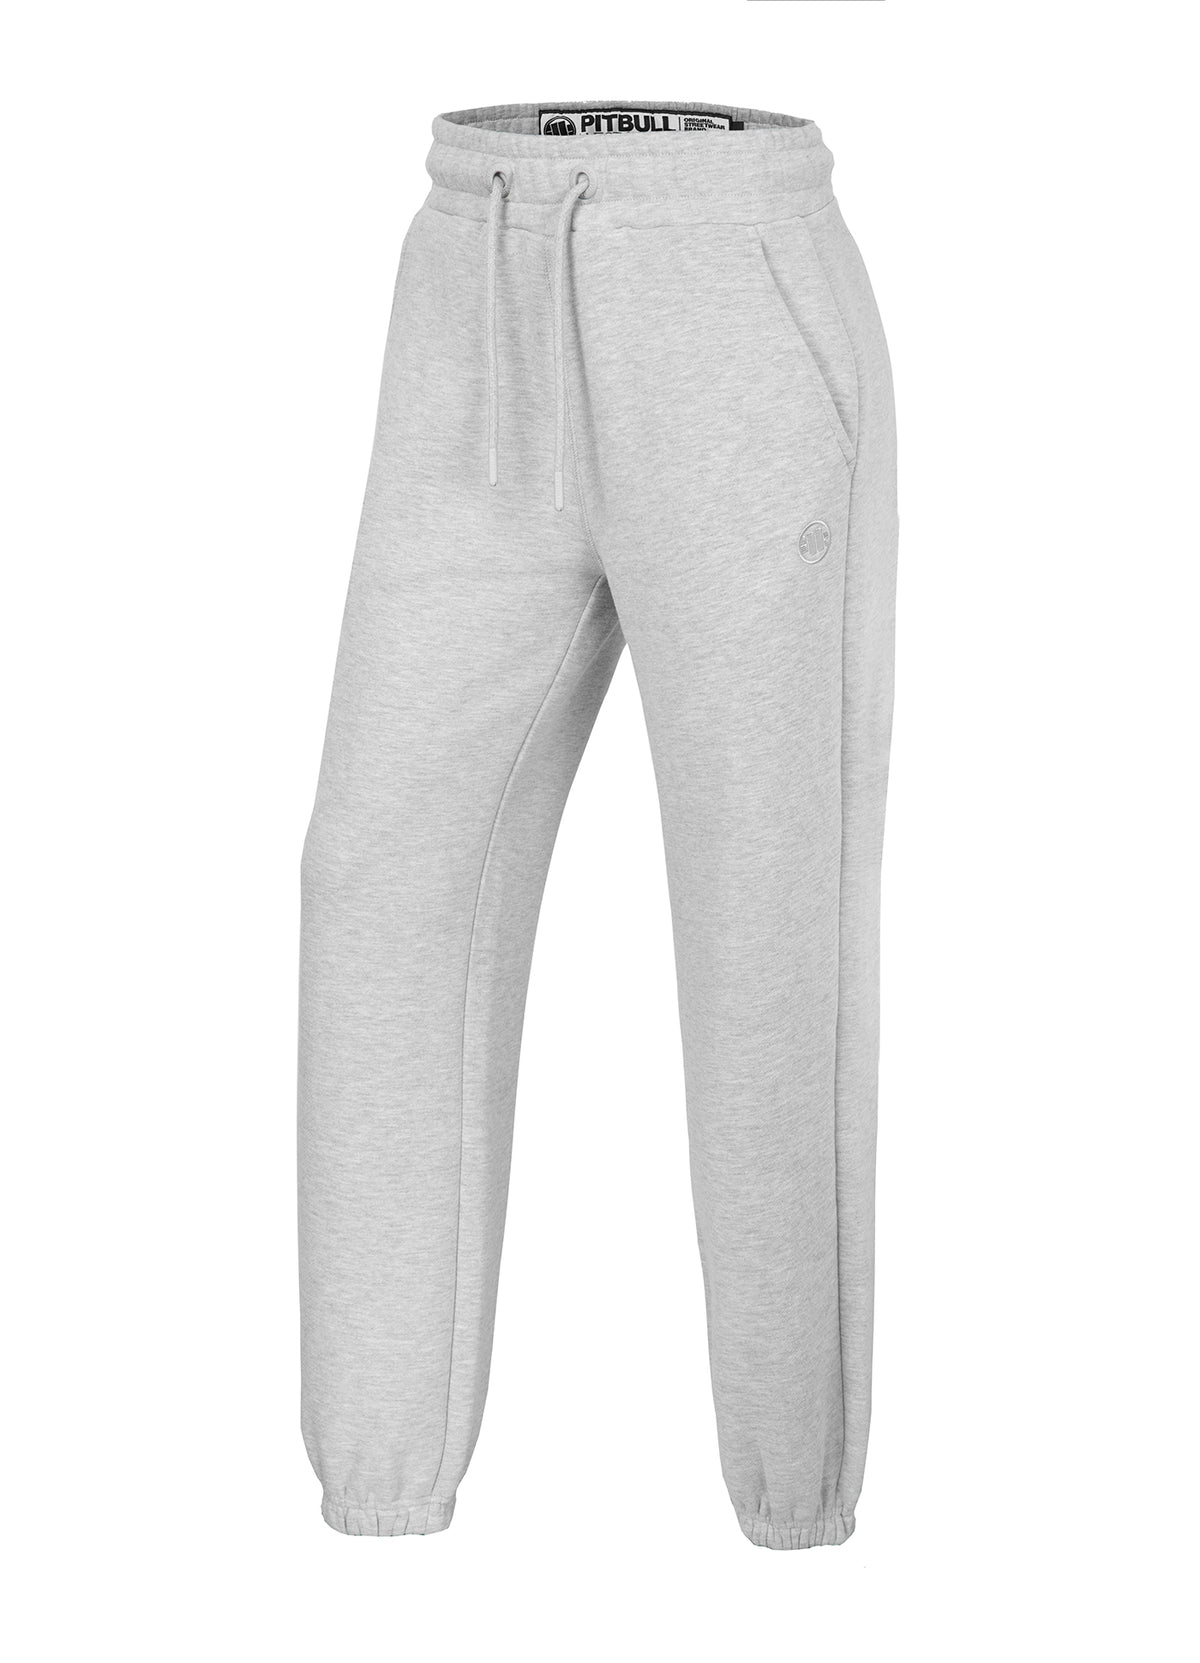 NEW LOGO Oversize Grey Tack Pants.